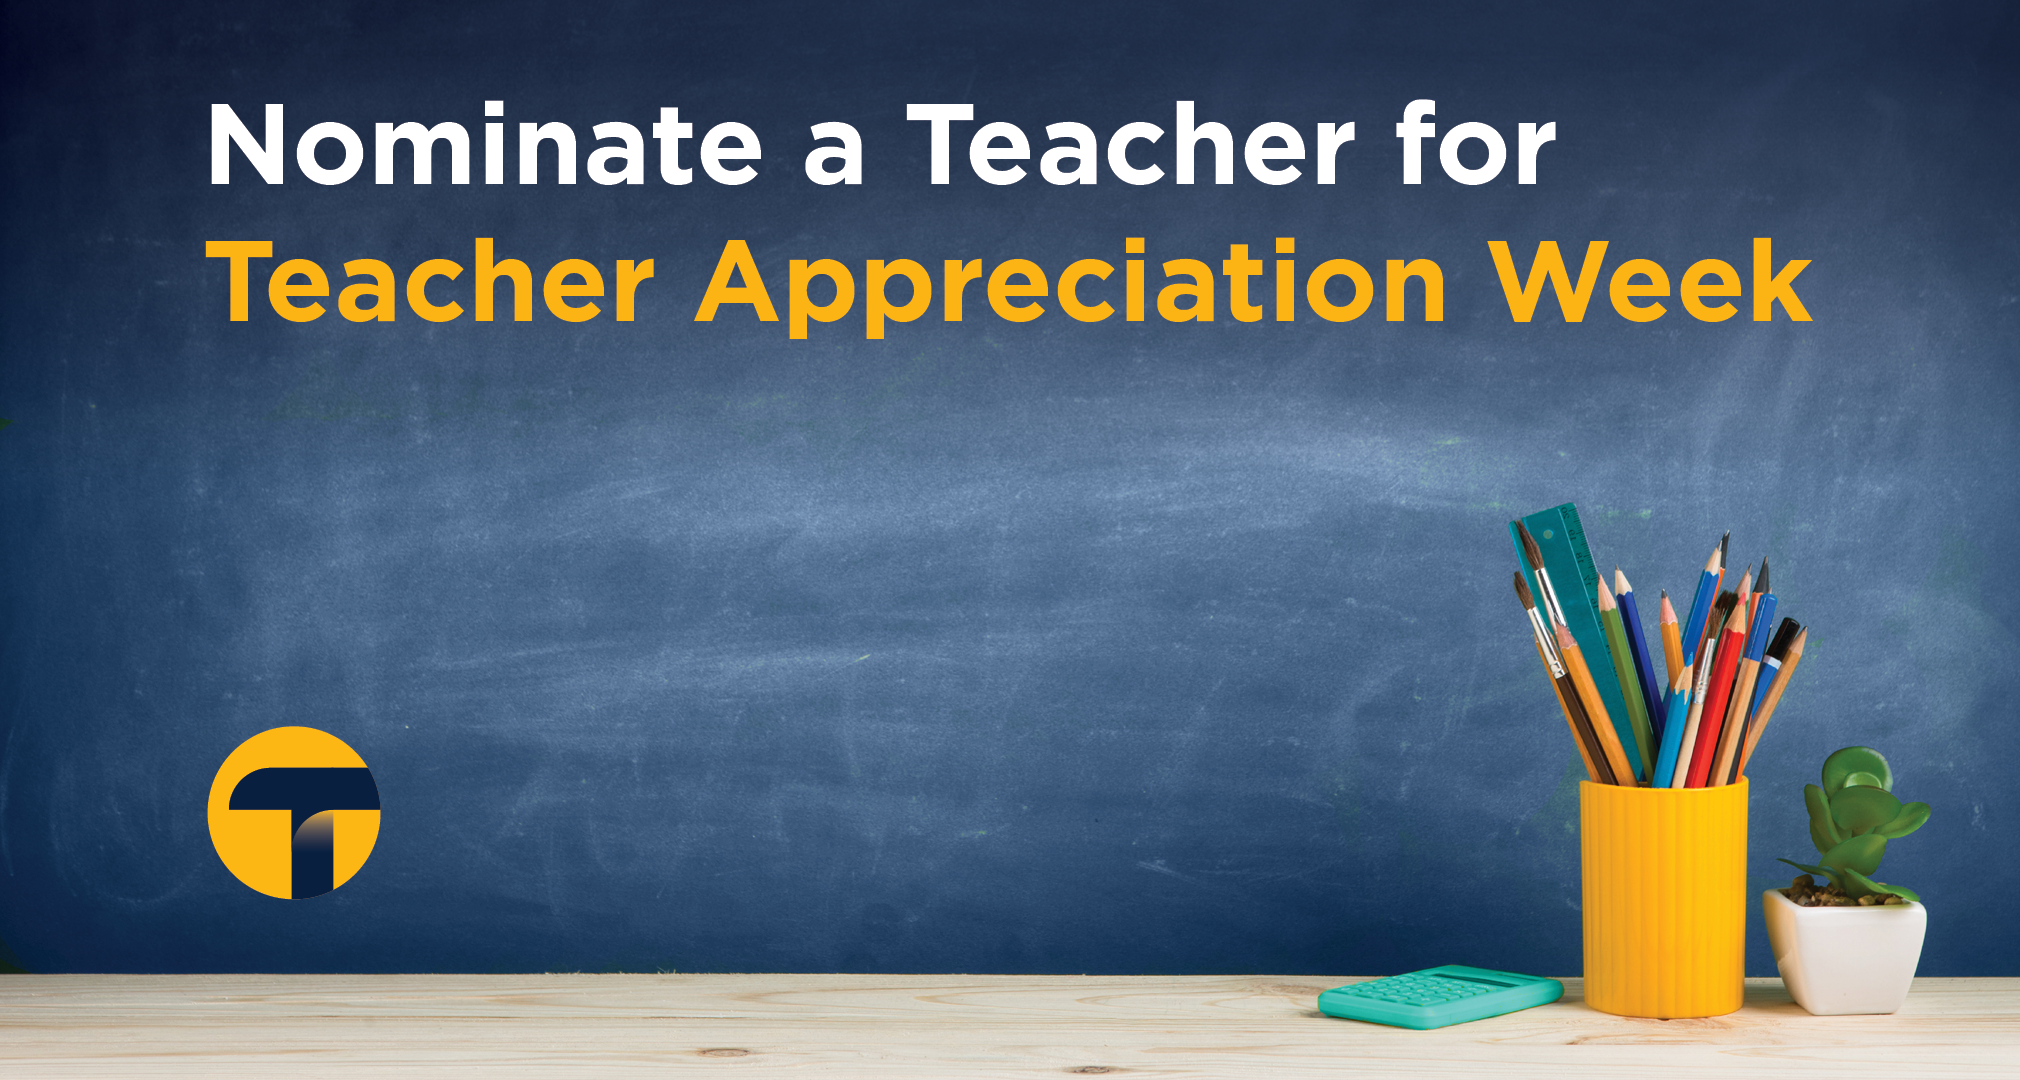 Teachers Appreciation Week